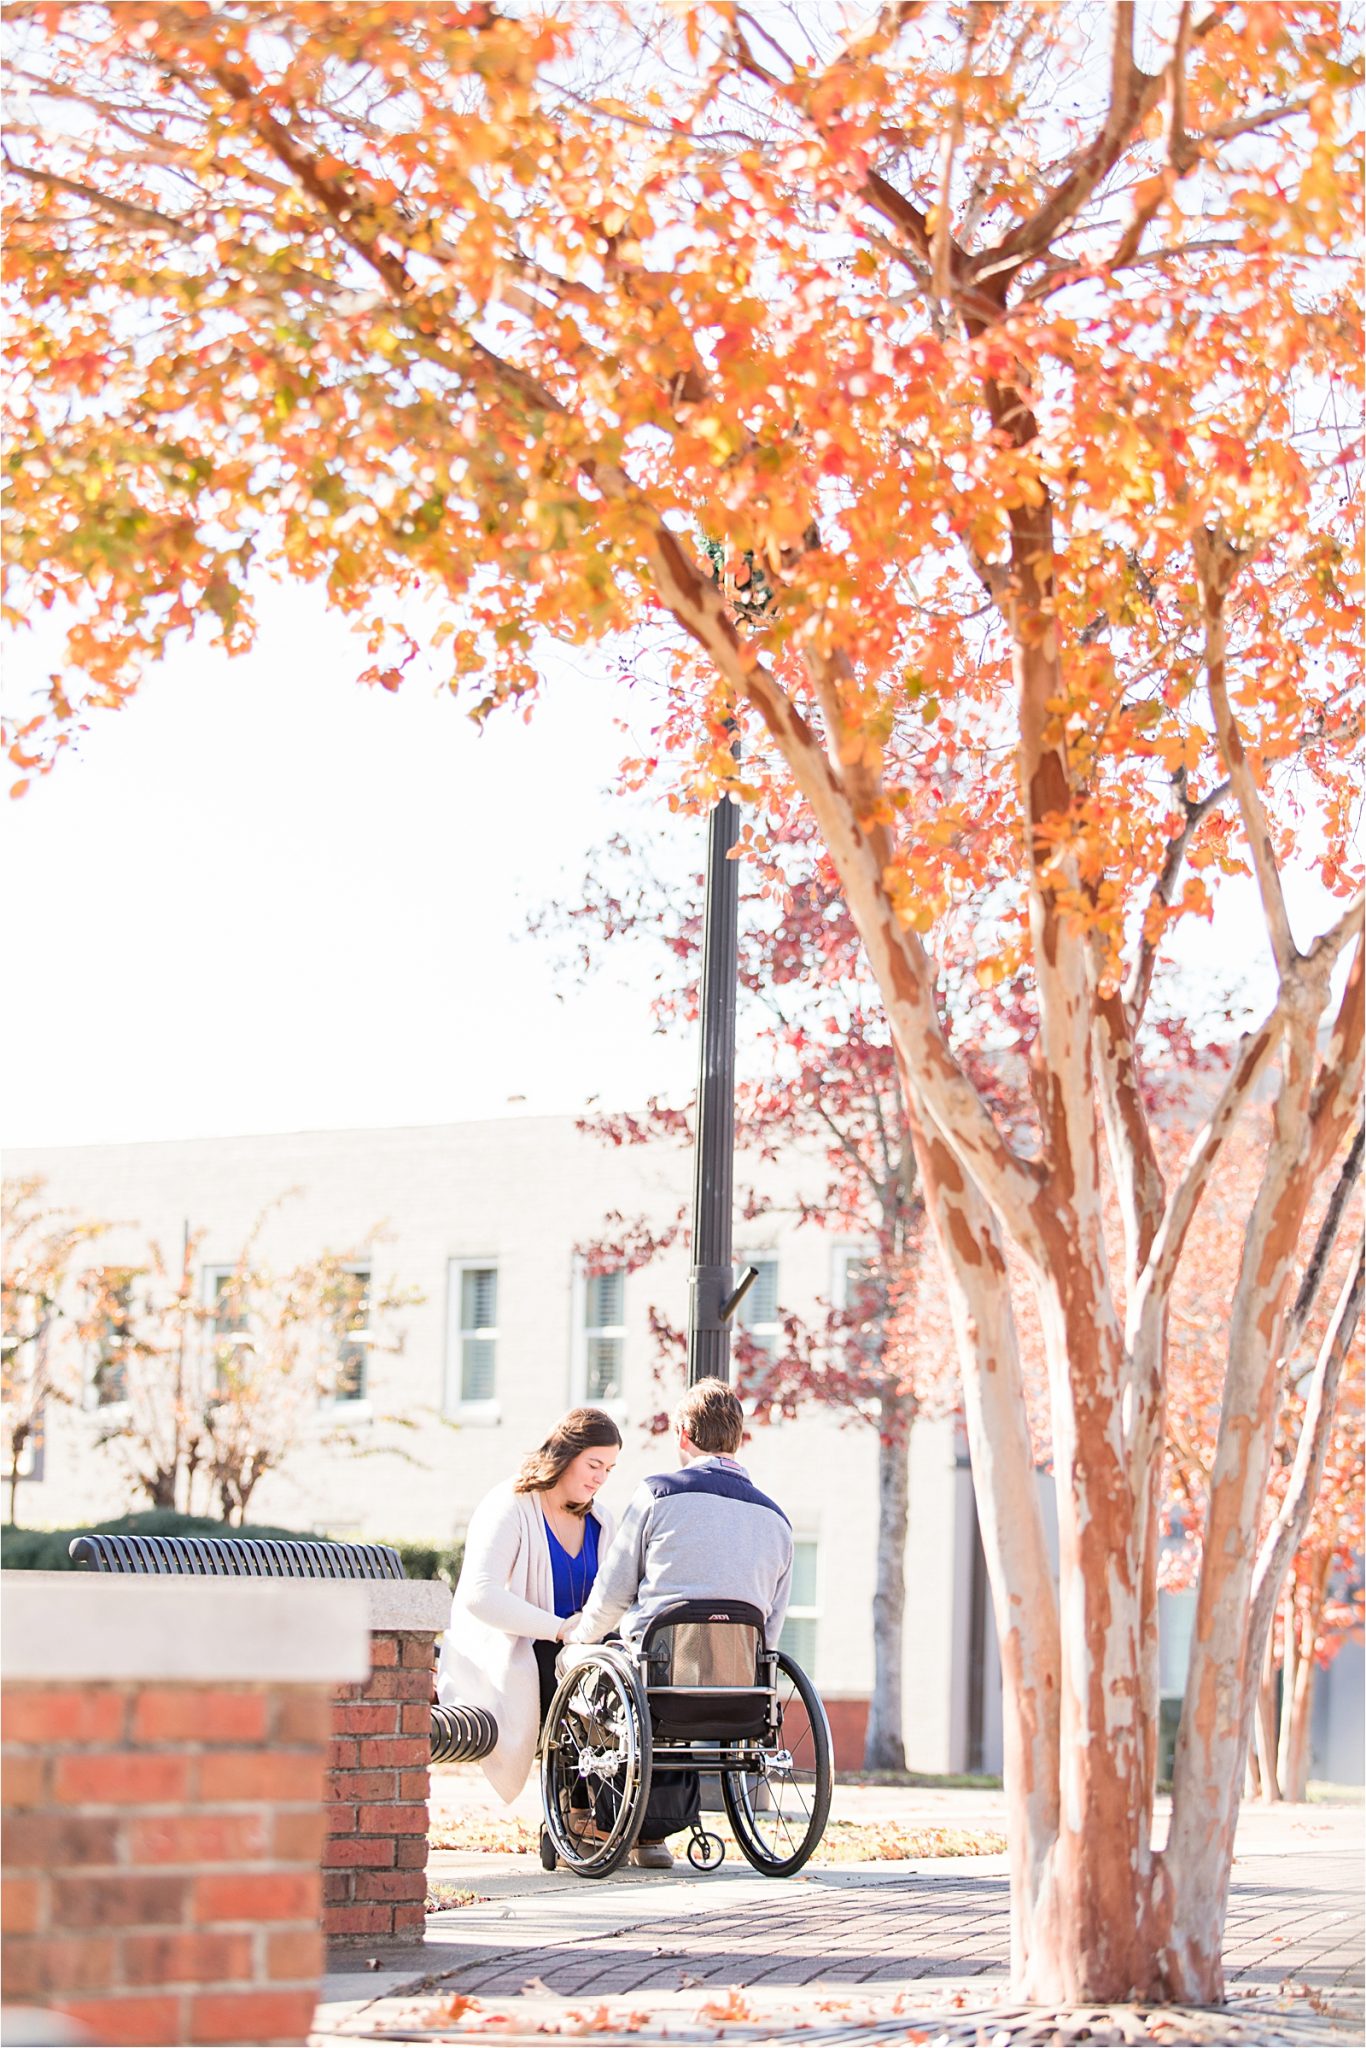 Auburn Alabama Engagement Photographer-Richard's Proposal to Debby-Fall proposal-Fall engagement-Autumn engagement